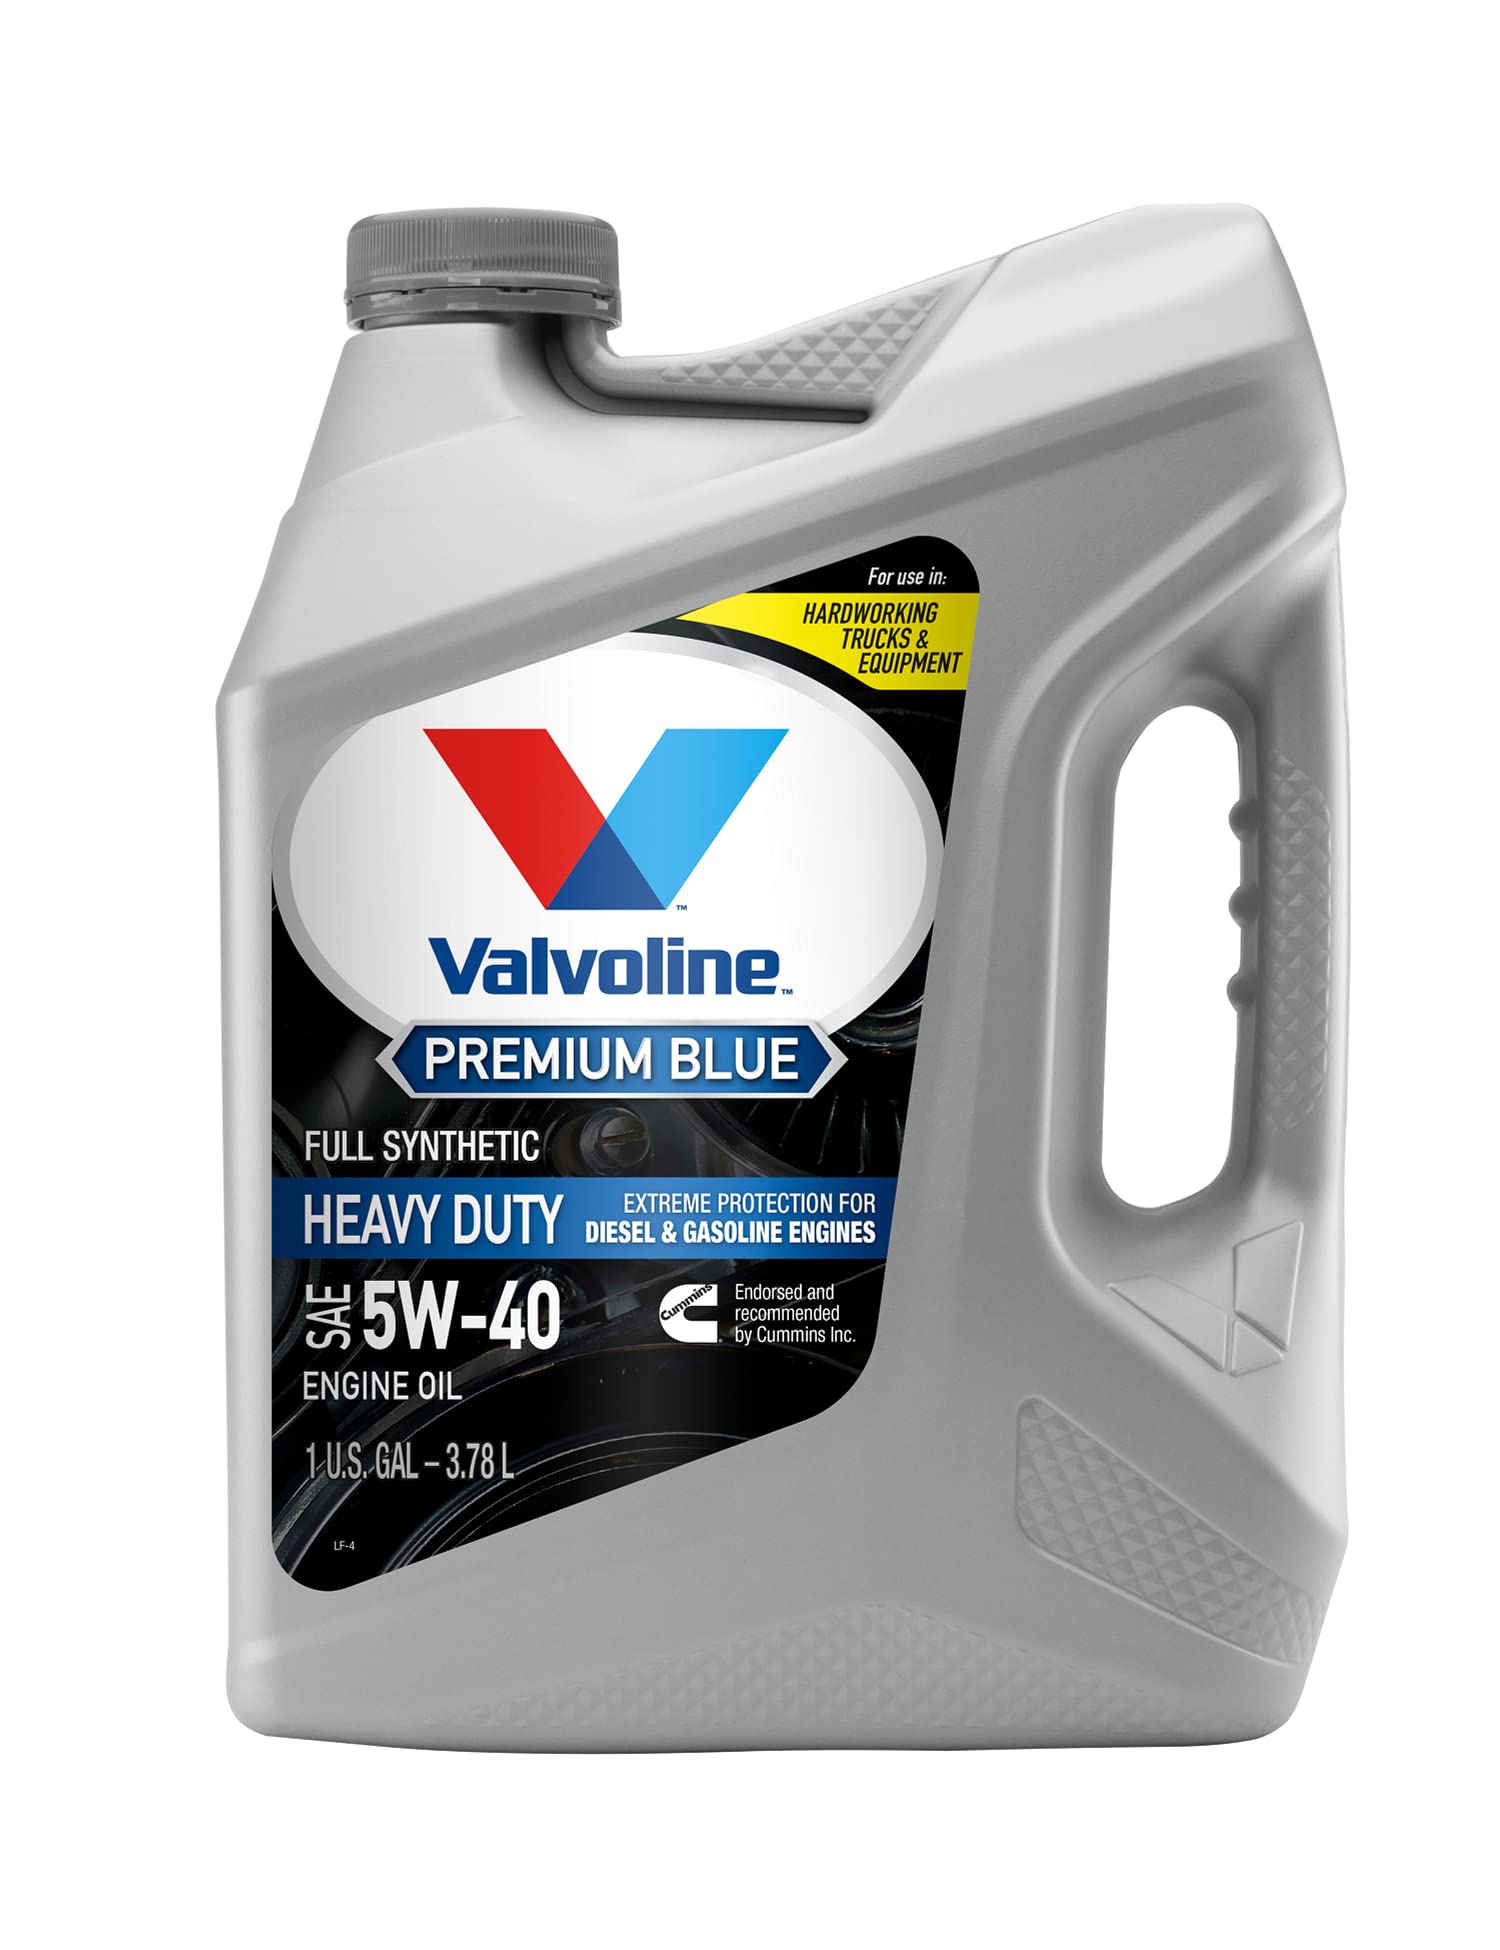 Valvoline Premium Blue Extreme SAE 5W-40 Full Synthetic Diesel Engine Oil 1 GA